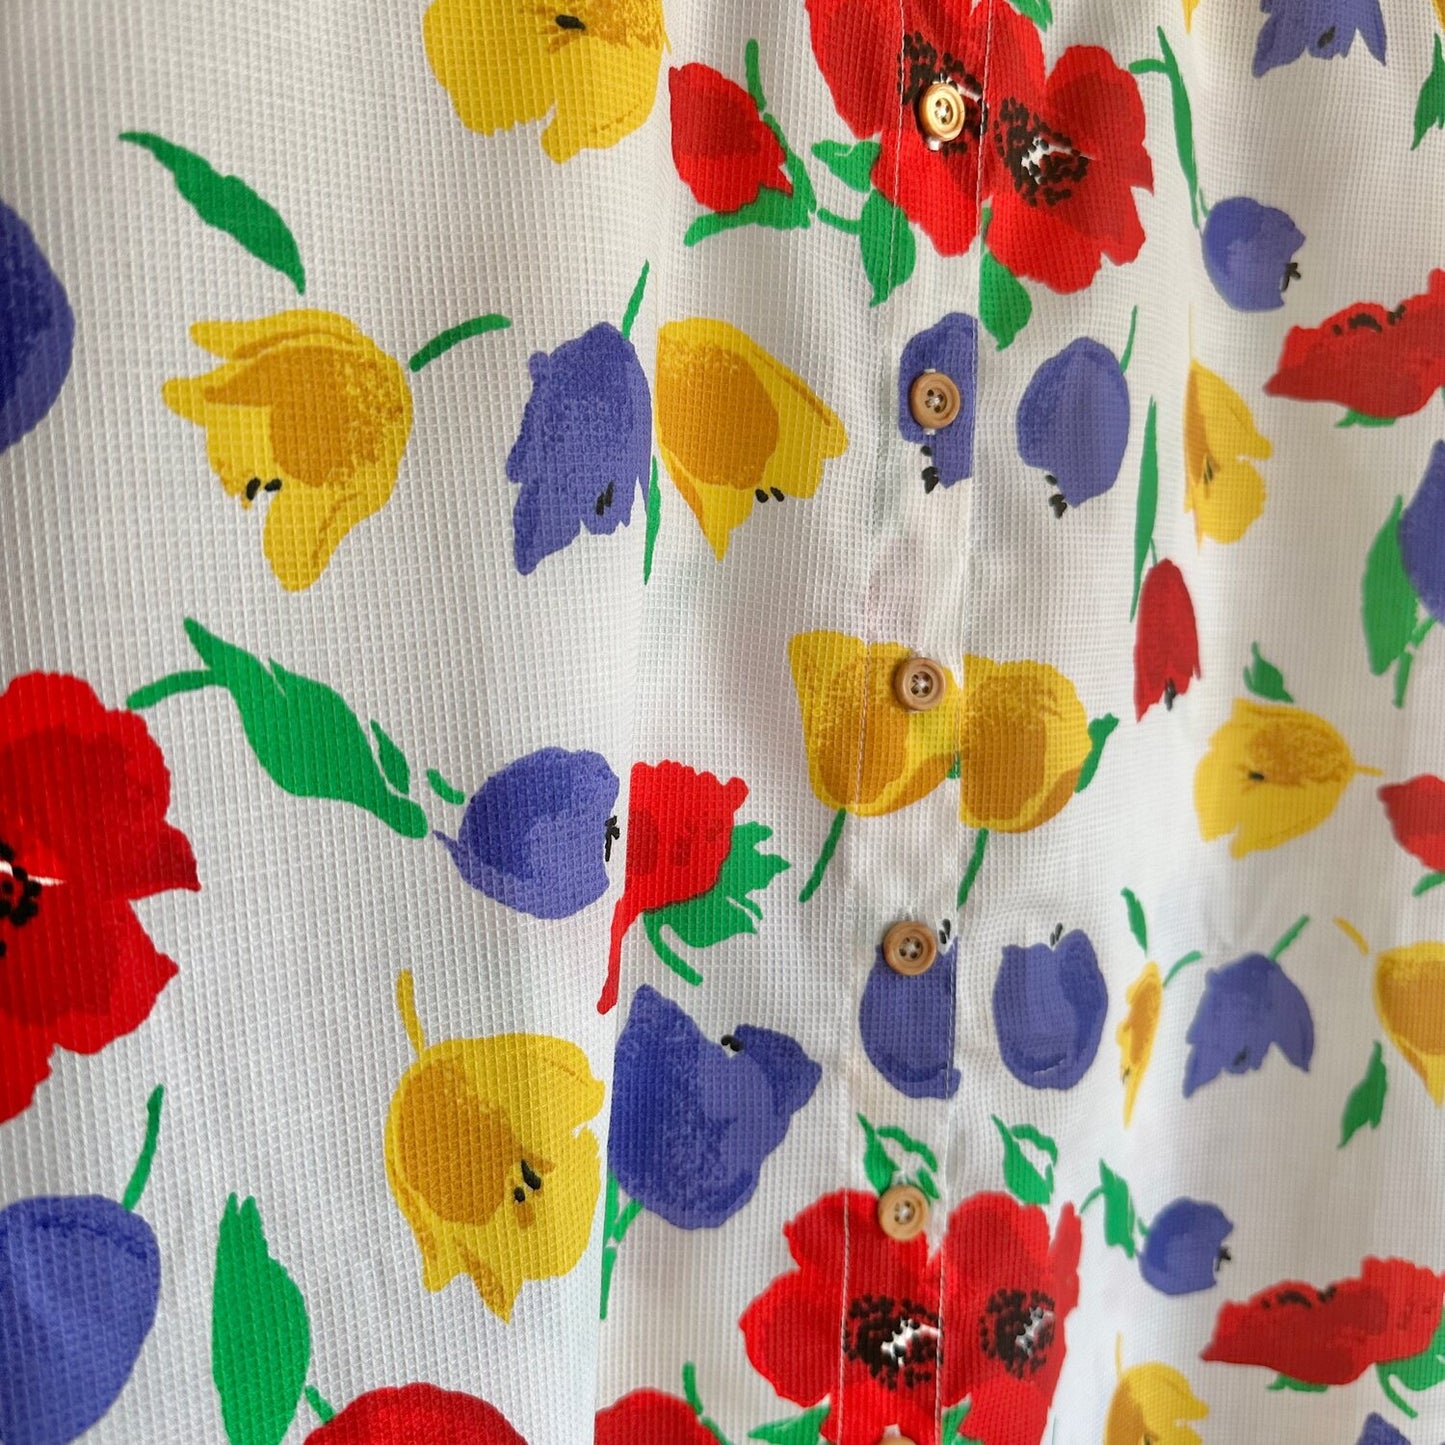 Willamette Vintage Primary Floral Shirt Dress - SZ OSP2